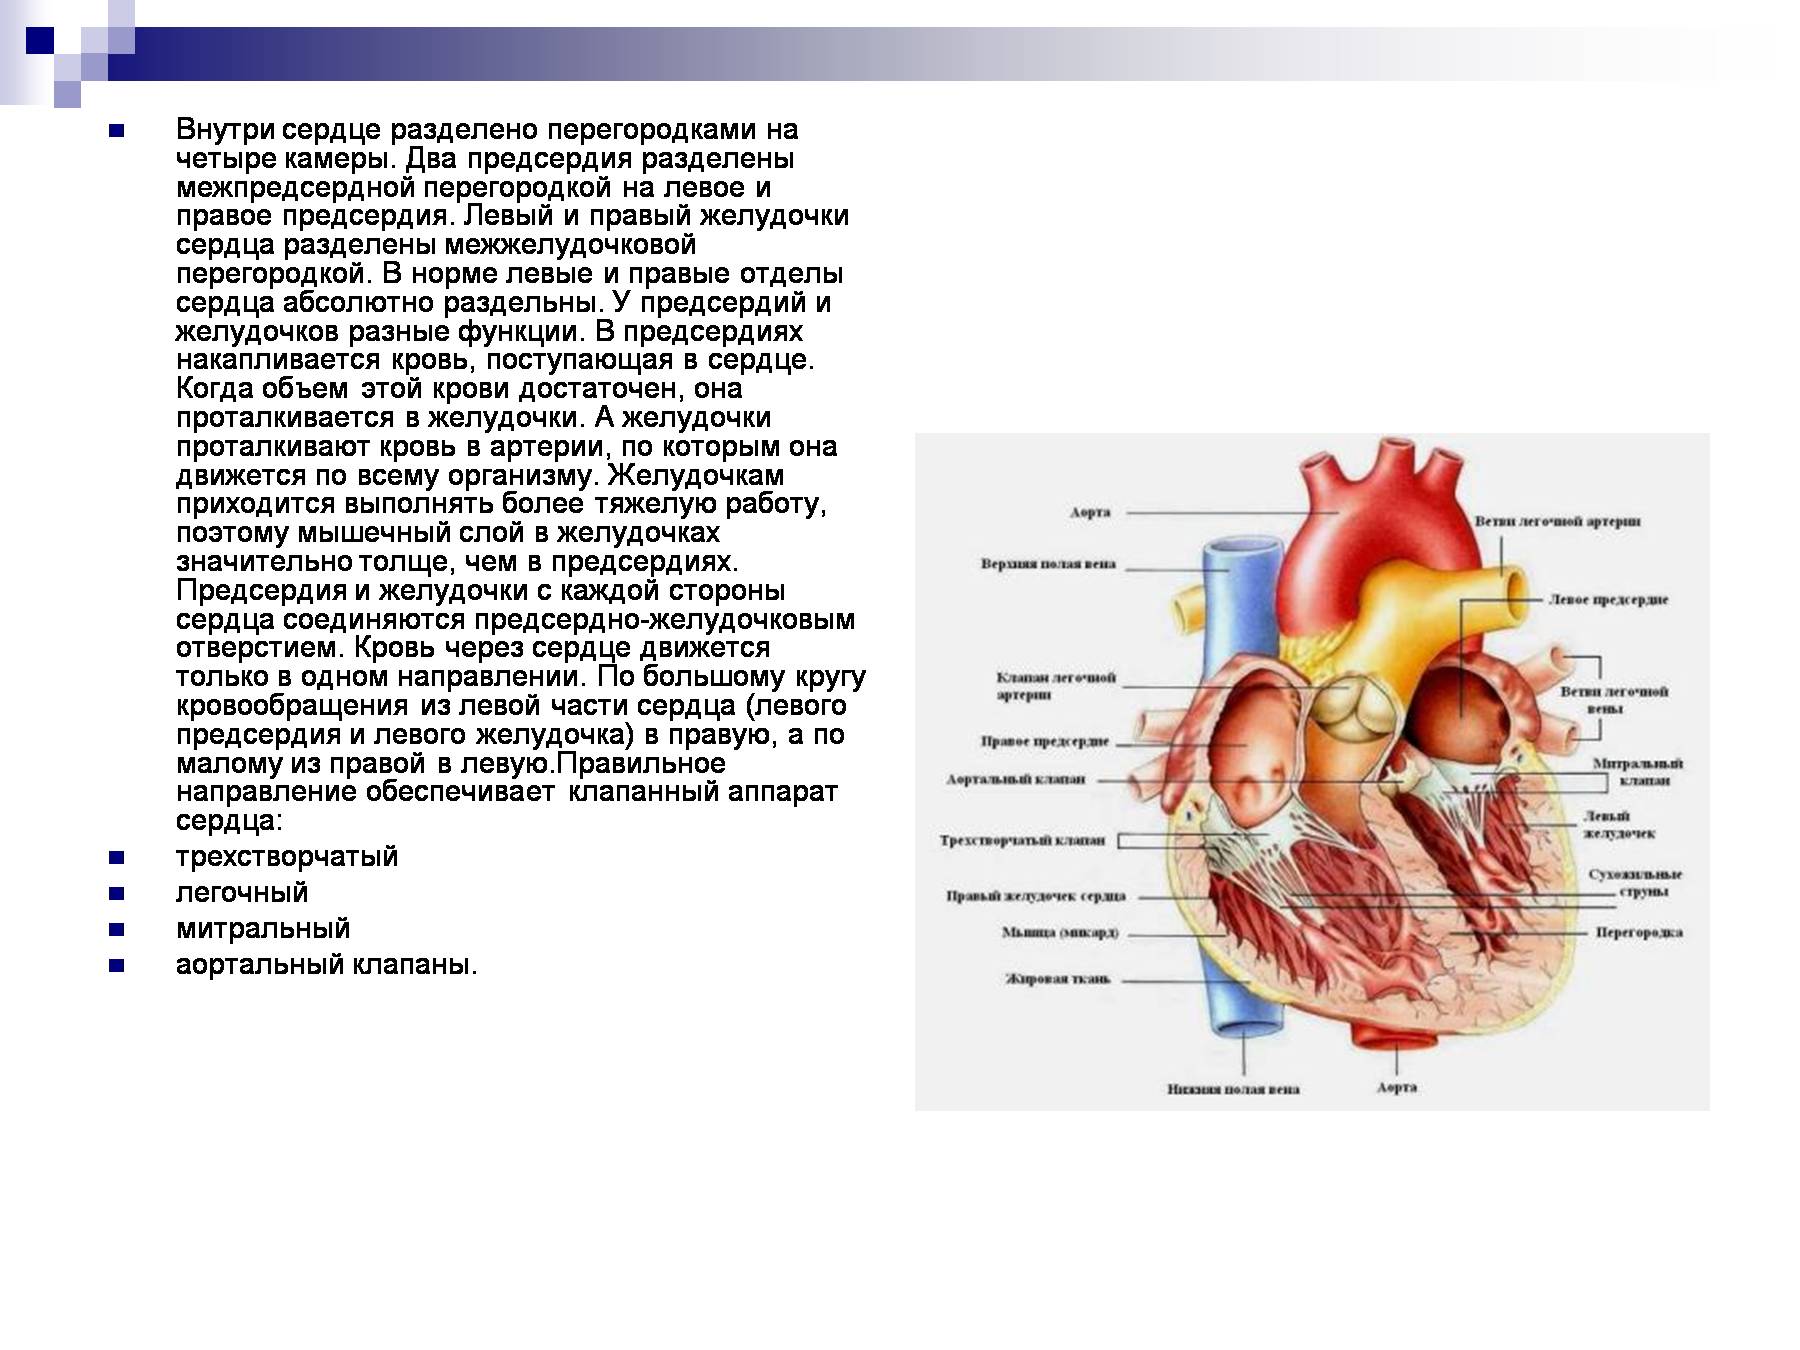 Предсердие желудка. Межпредсердная перегородка сердца строение. Строение межпредсердной перегородки сердца. Перегородка предсердий и желудочков сердца. Расширение левого предсердия (объем 88 мл).